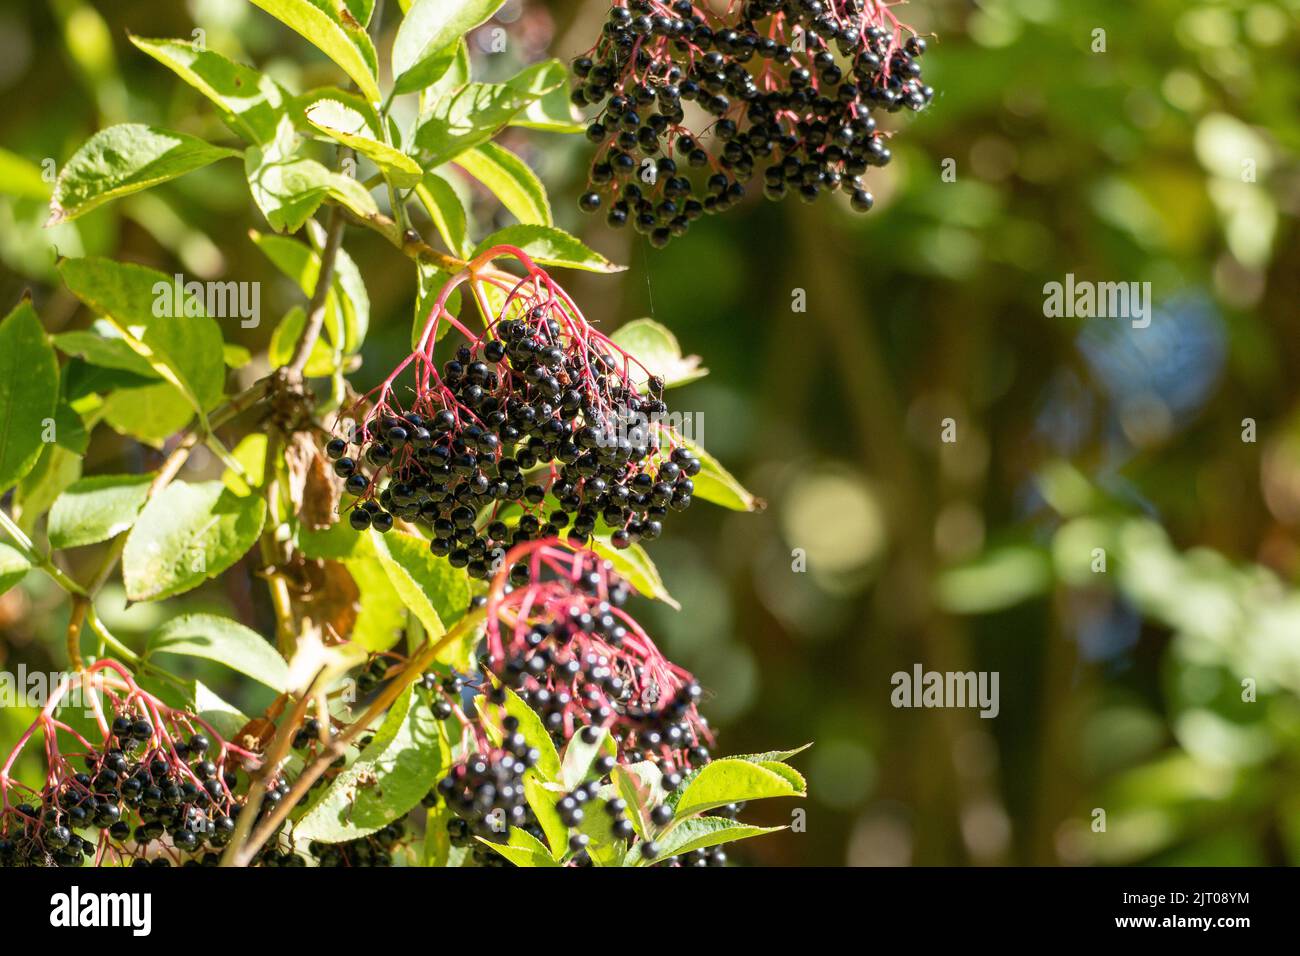 selected focus bunches of ripe black elderberries Stock Photo